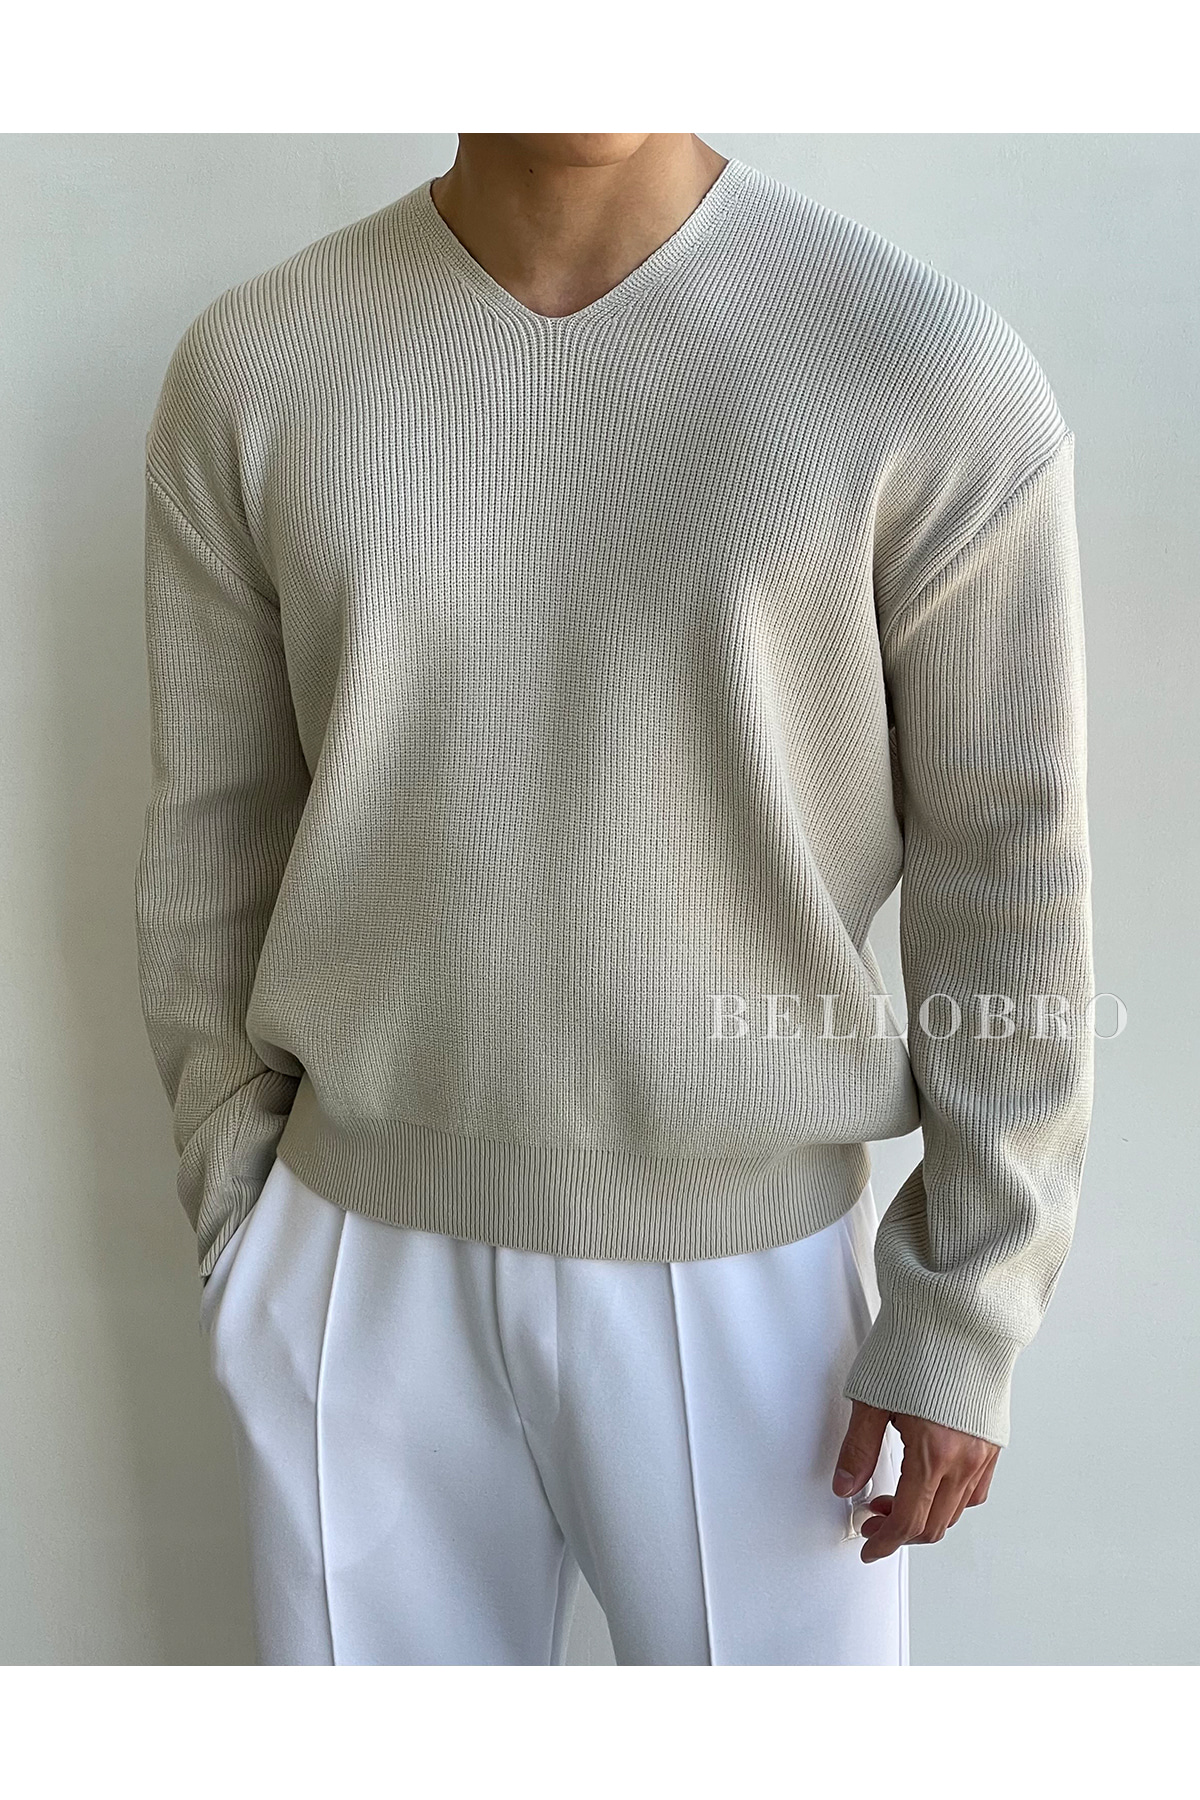 Bellobro Milano crop knit (soft v-neck)